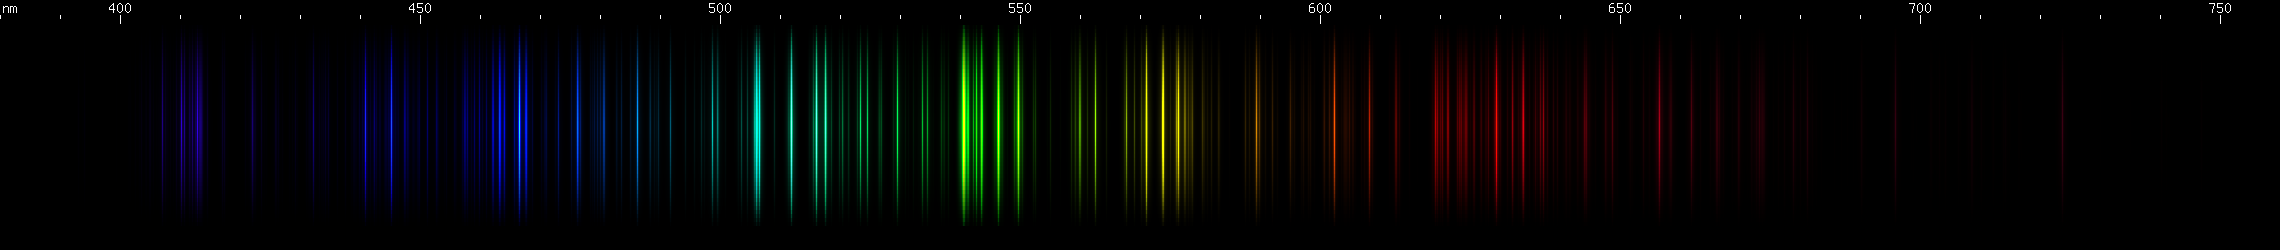 Spectral Lines of Iodine